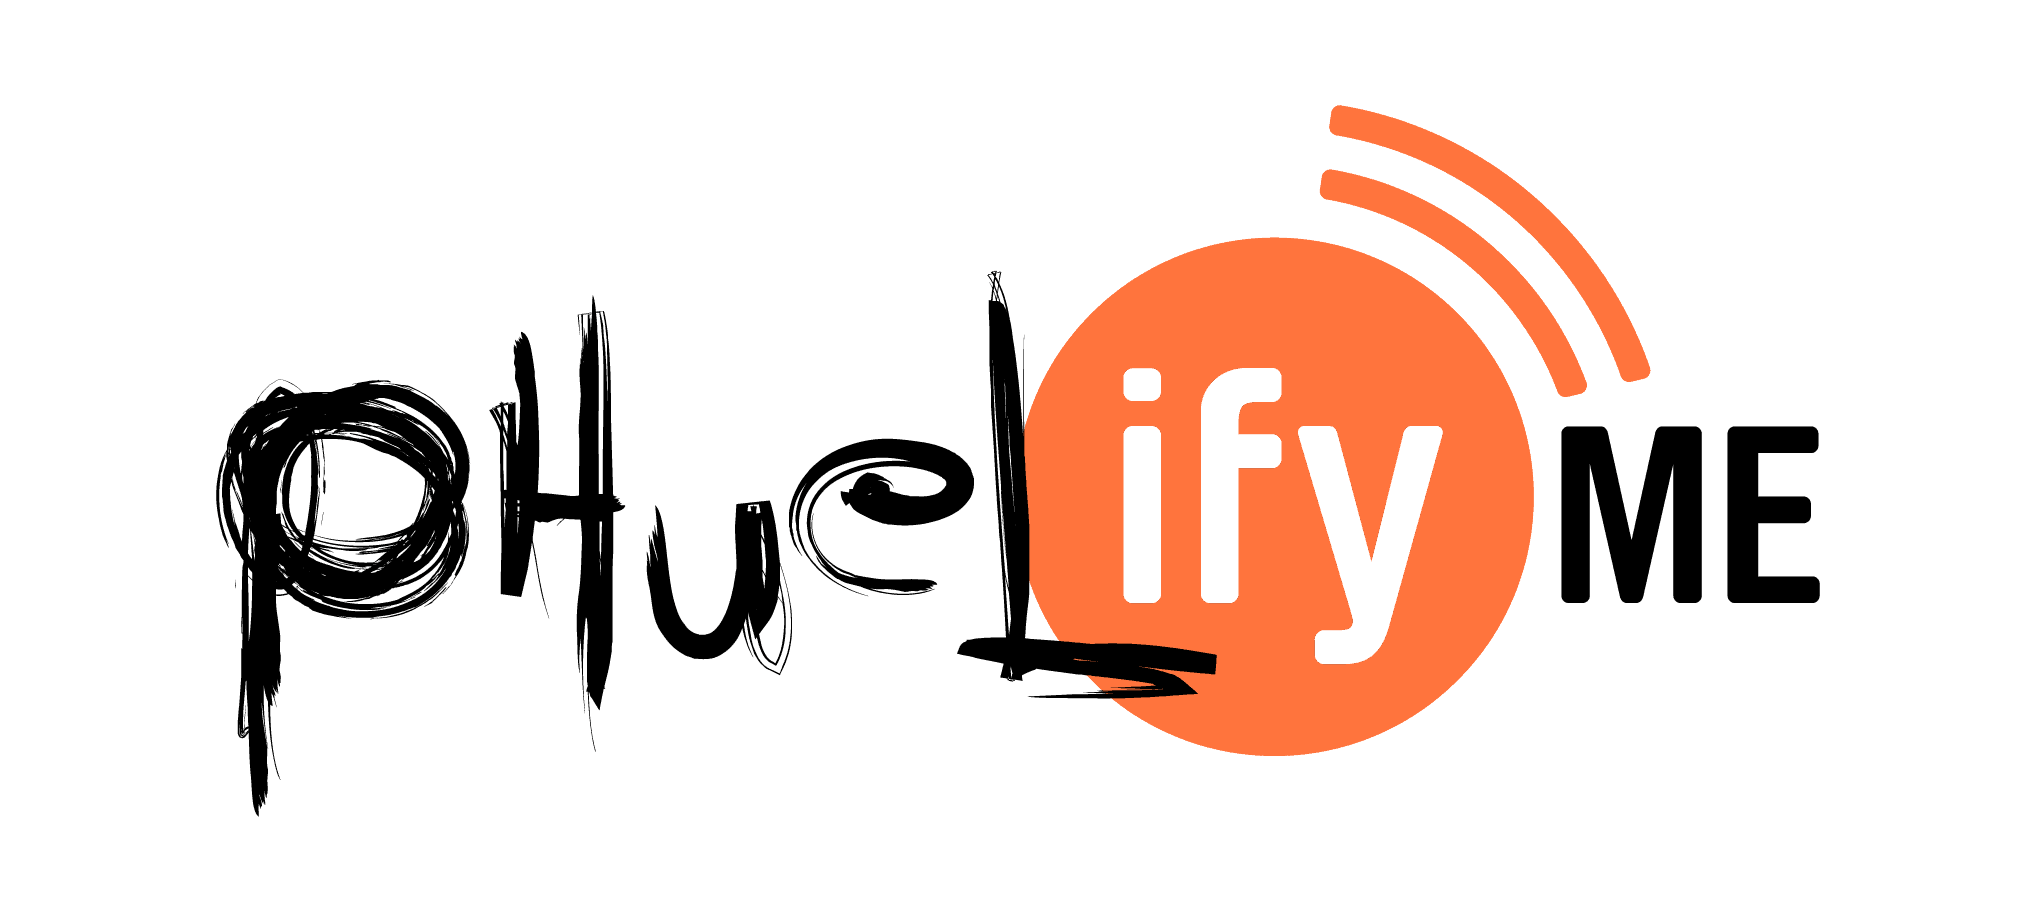 Phuelify me logo